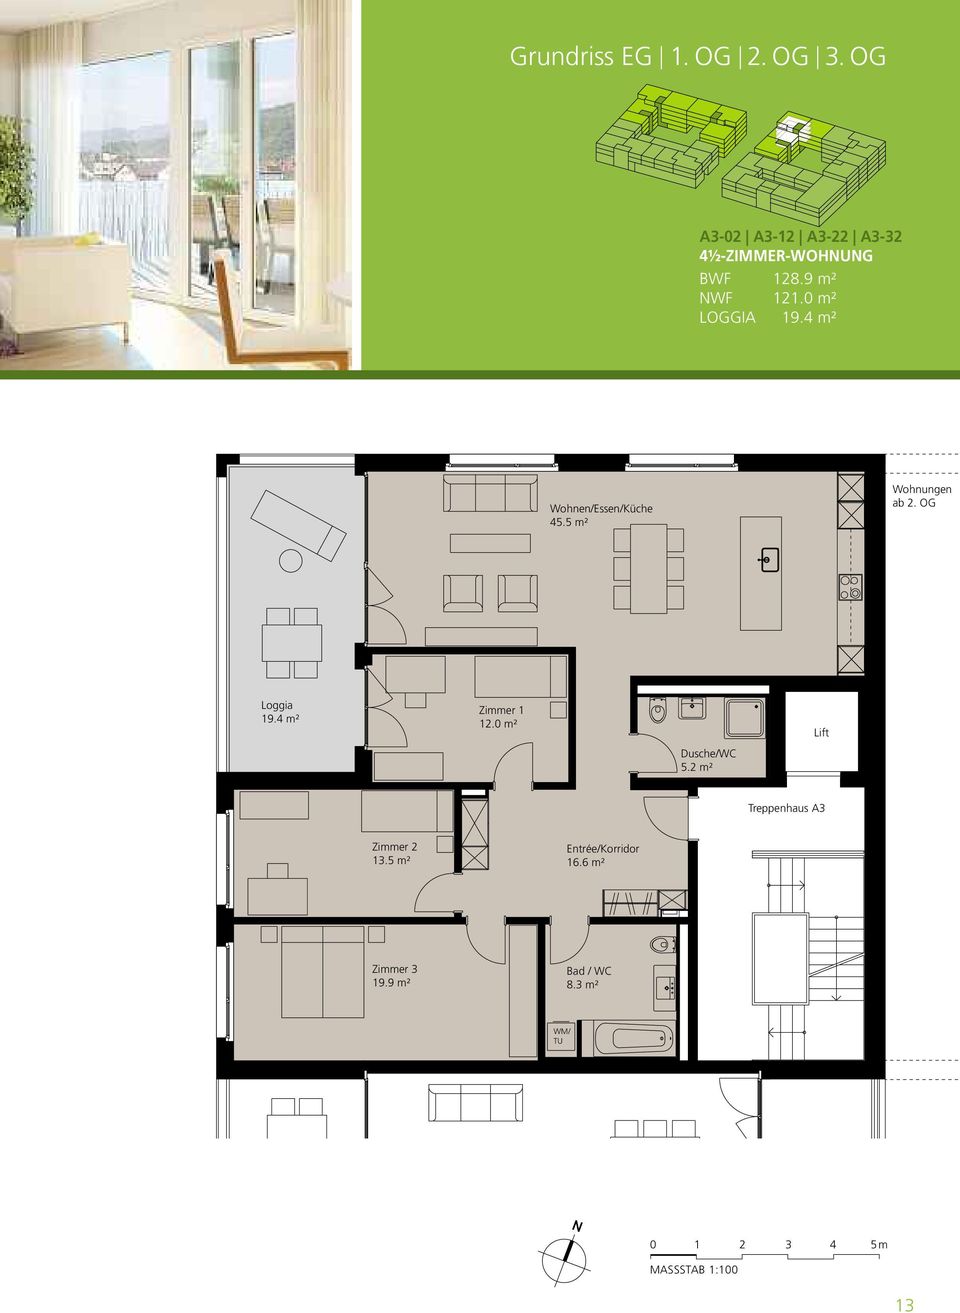 OG Loggia 19.4 m² Zimmer 1 12.0 m² Dusche/WC 5.2 m² Lift Treppenhaus A3 Zimmer 2 13.